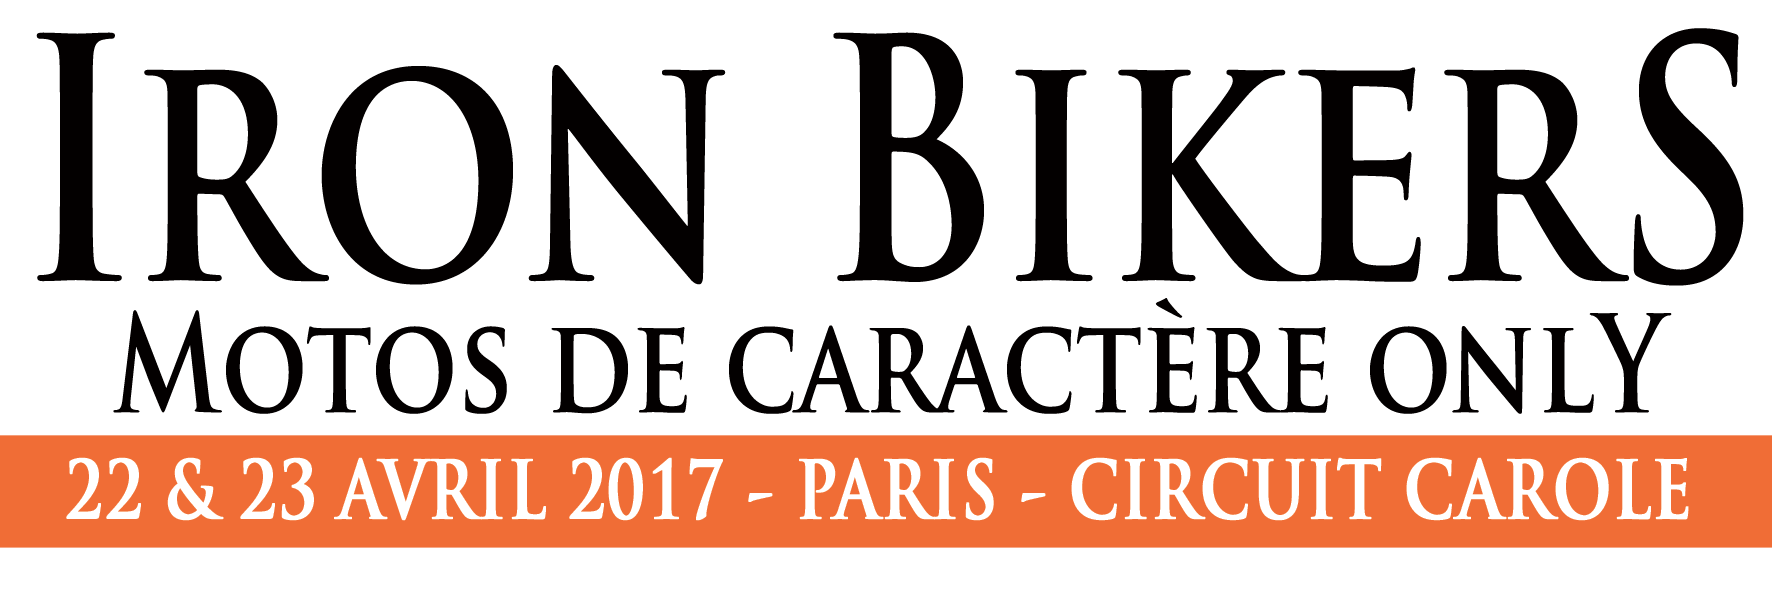 IRON BIKERS (IdF circuit Carole) - 22 et 23 avril 2017  7wval8j0qfe